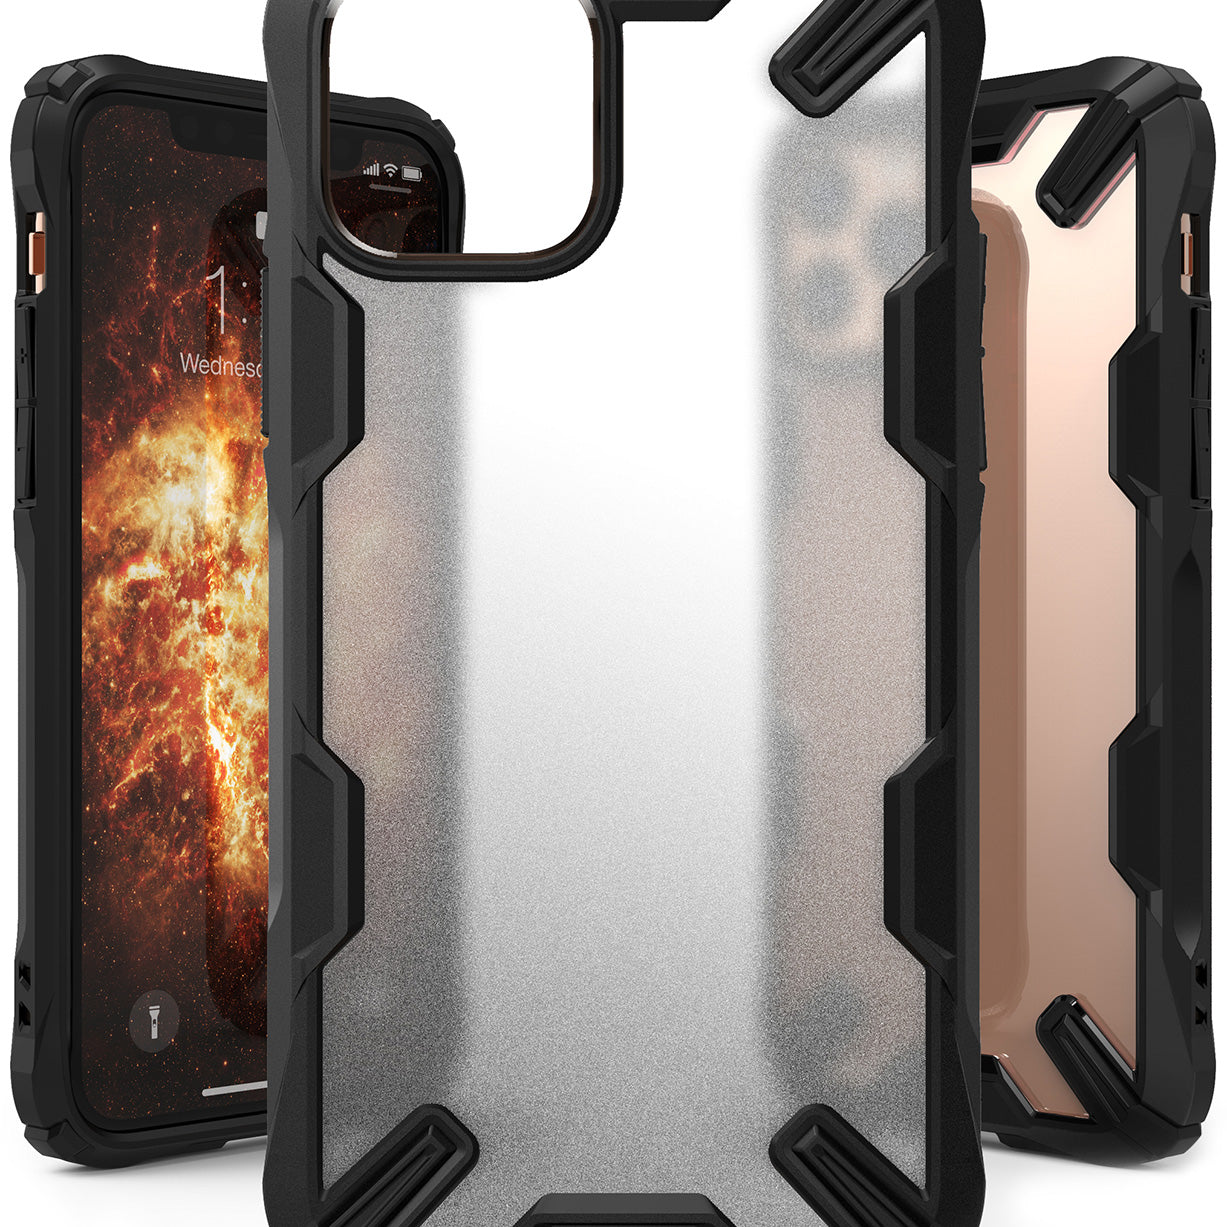 Ringke Fusion-X Matte Designed Case for iPhone 11 Pro Max black